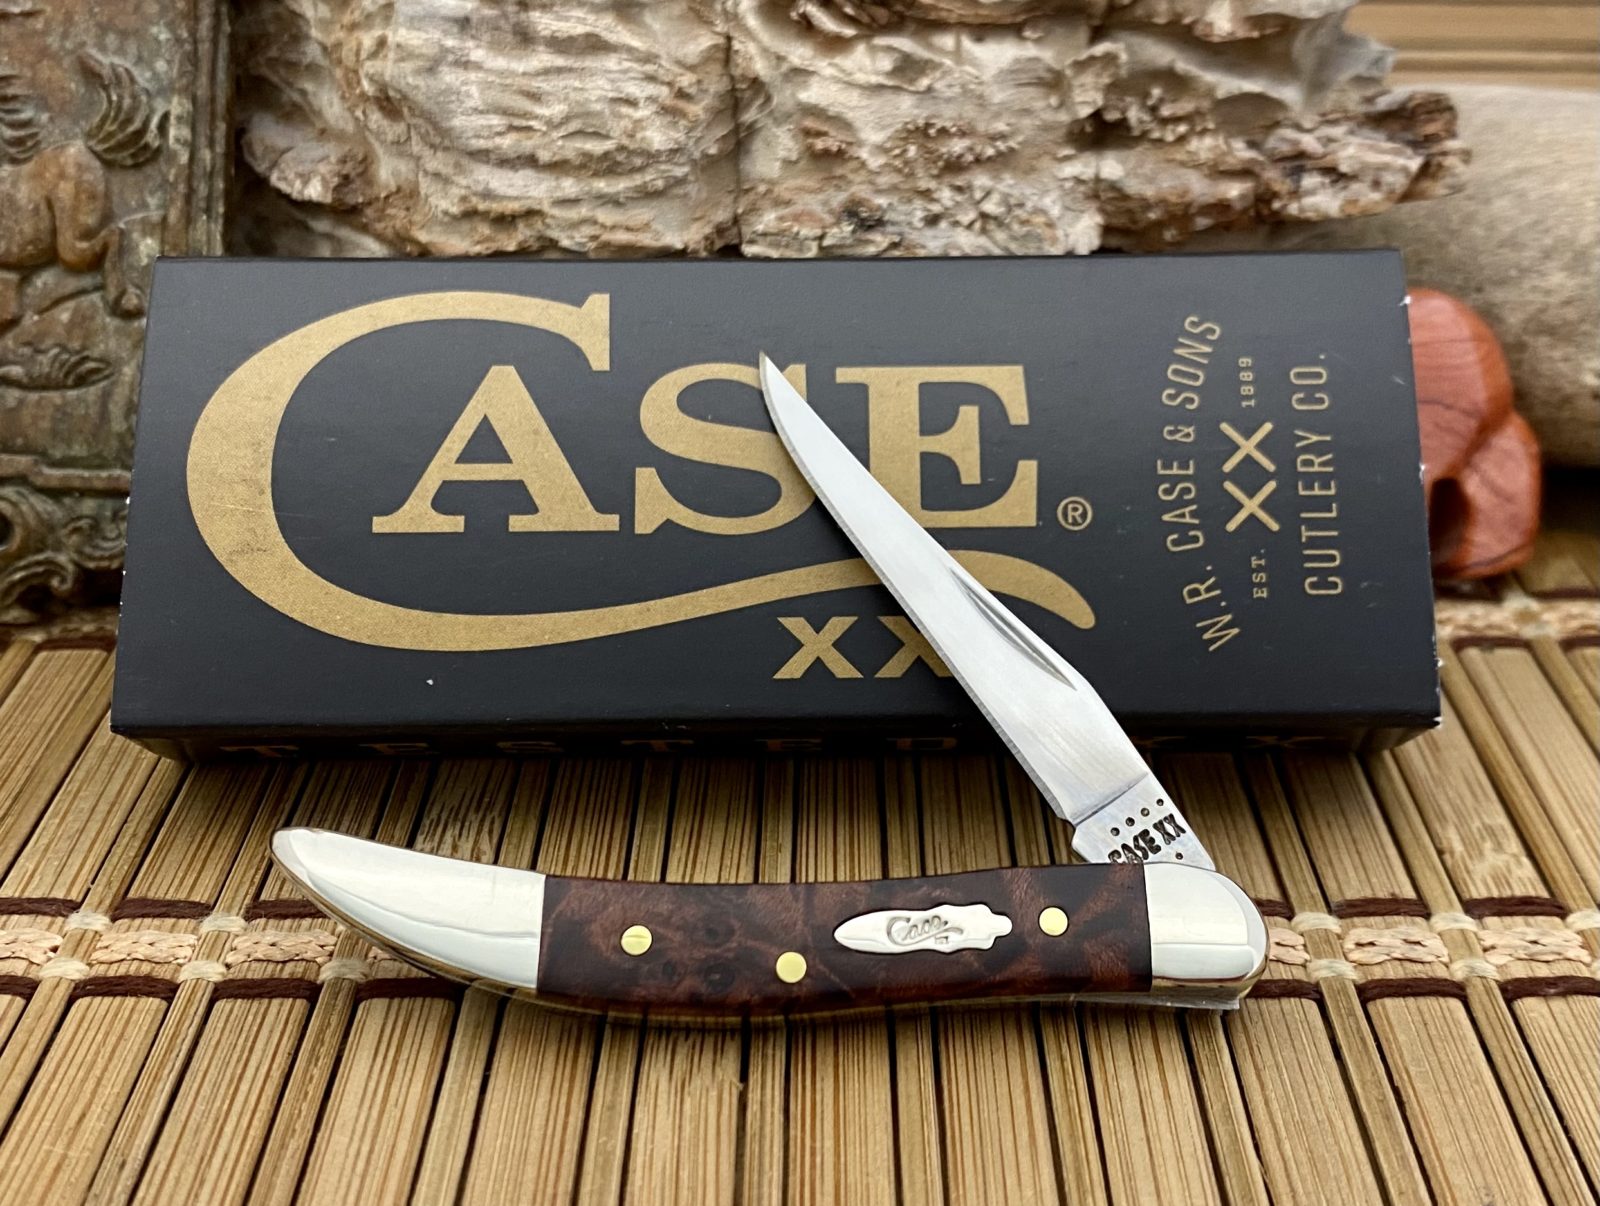 Wood Carving Knife - Texan Knives